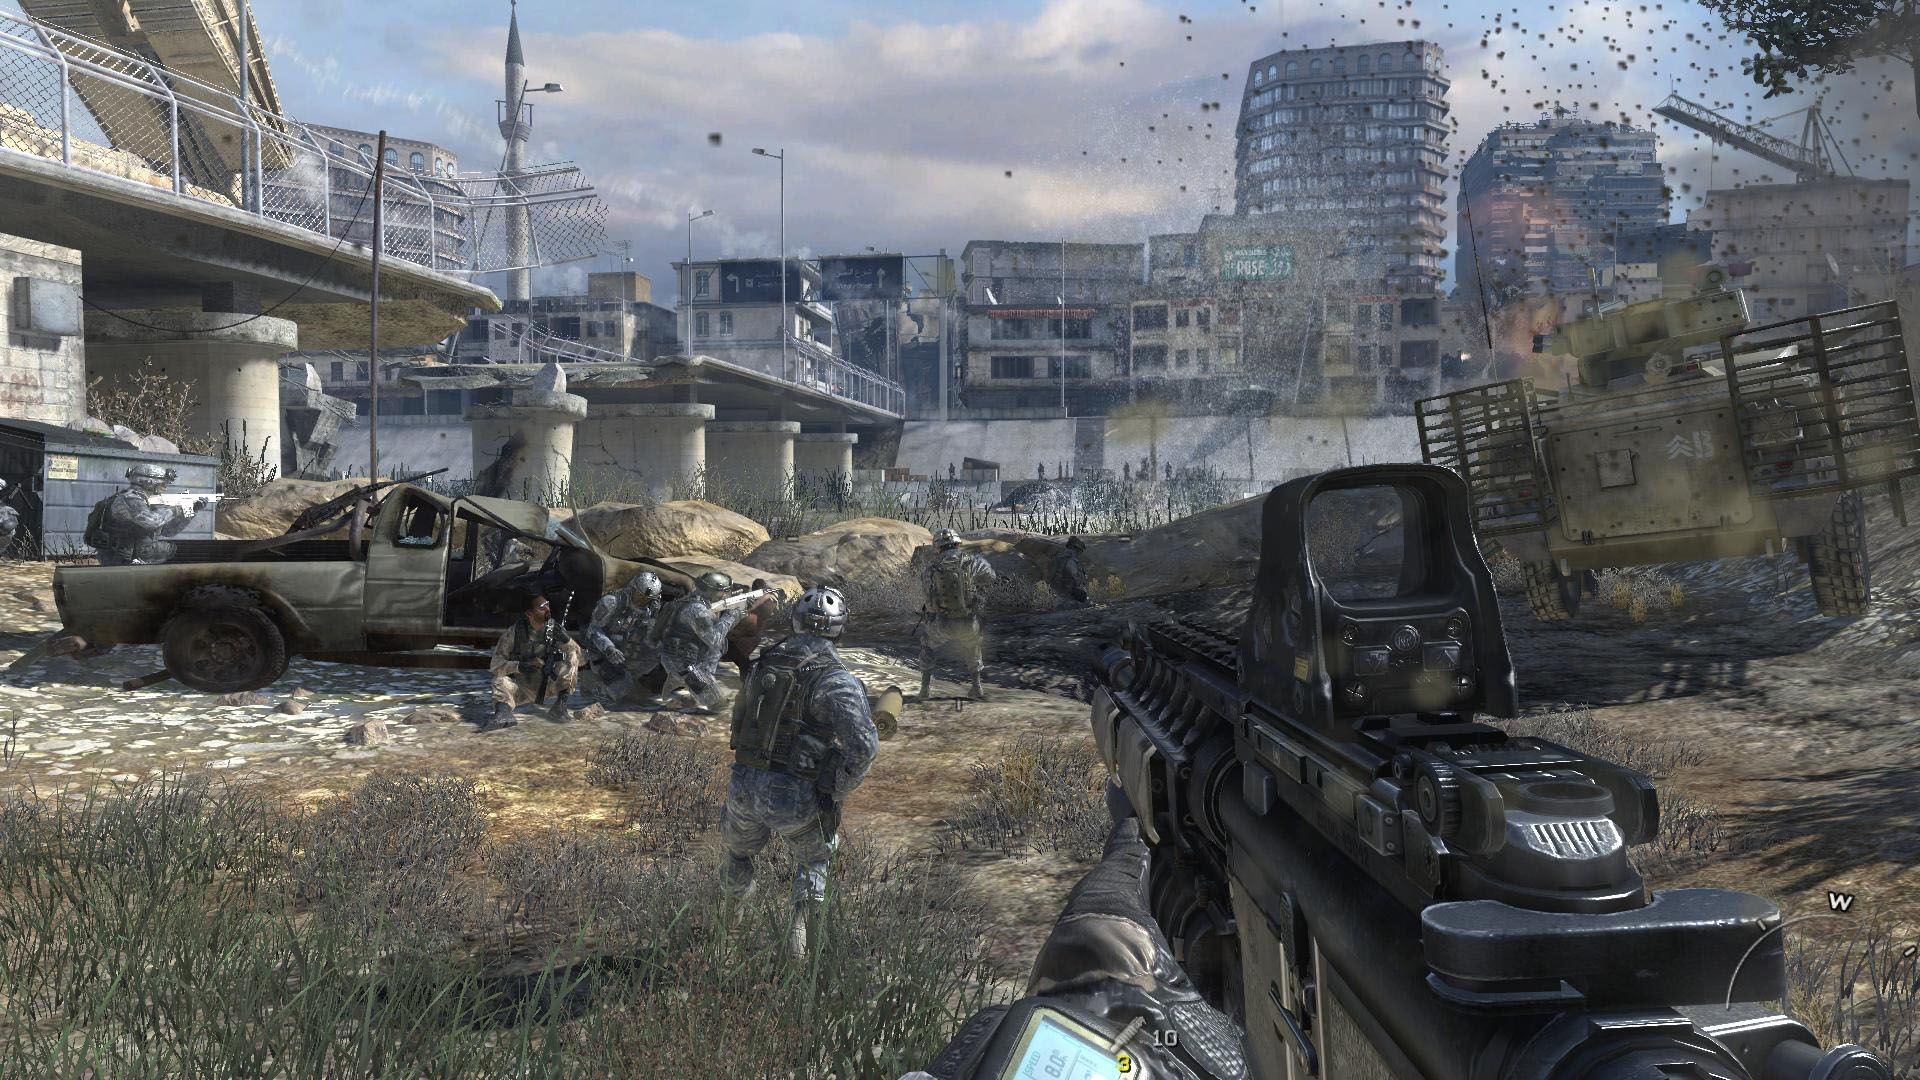 Buy Call of Duty: Modern Warfare 2 Steam